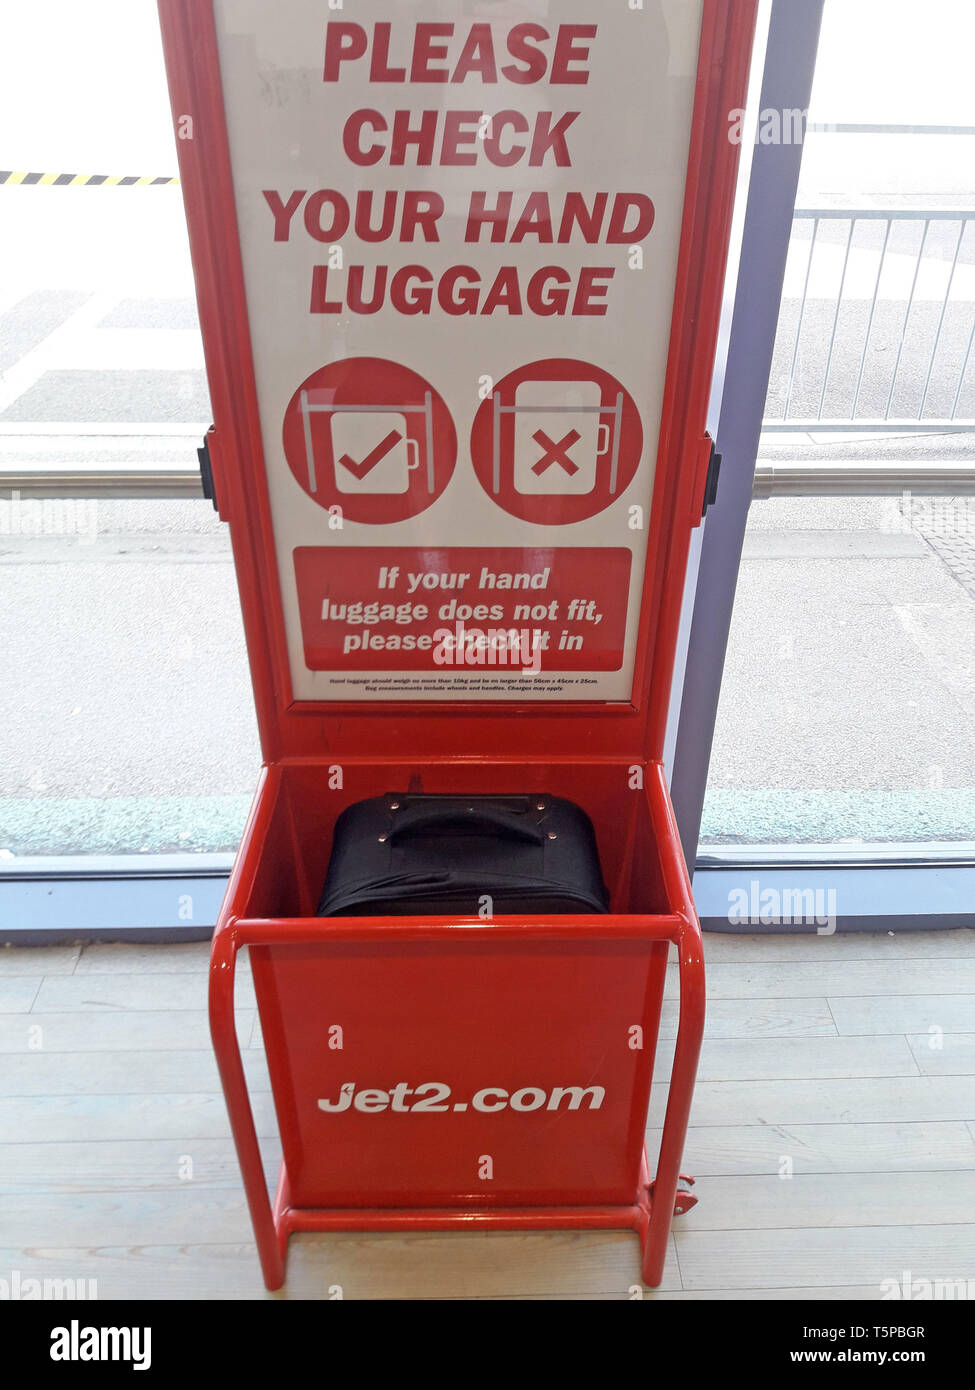 https://c8.alamy.com/comp/T5PBGR/jet2com-jet-2-hand-luggage-bag-frame-size-tester-at-east-midlands-airport-in-leicestershire-uk-april-13-2019-T5PBGR.jpg